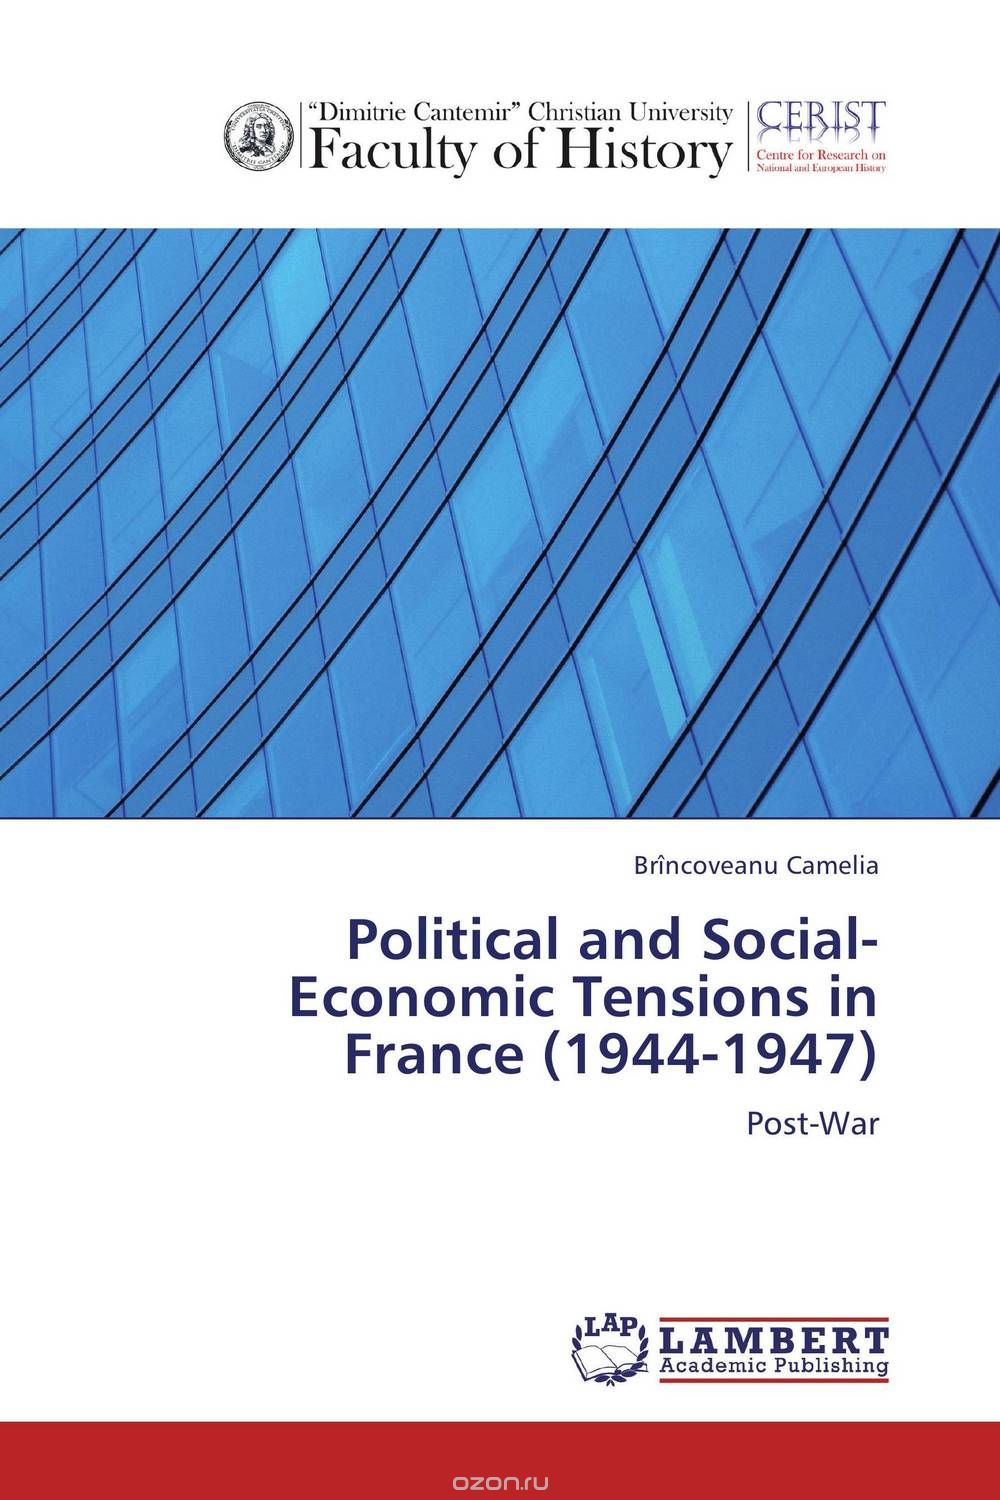 Скачать книгу "Political and Social-Economic Tensions in France (1944-1947)"